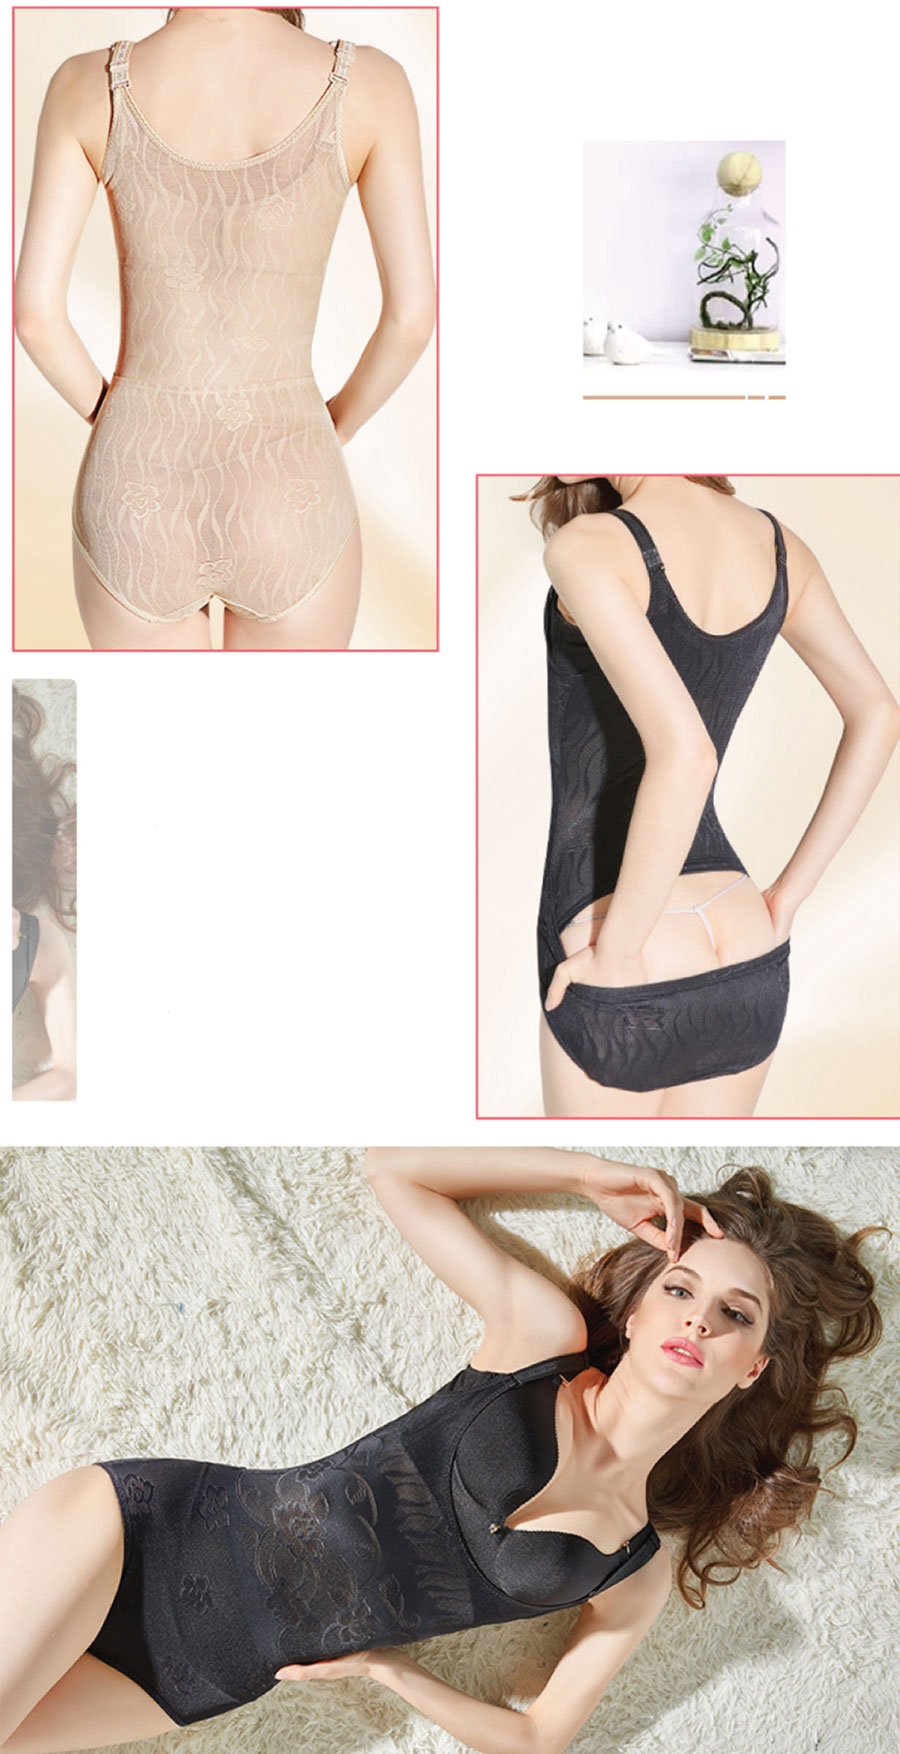 U-Shaped Breast Support Shapewear - Display